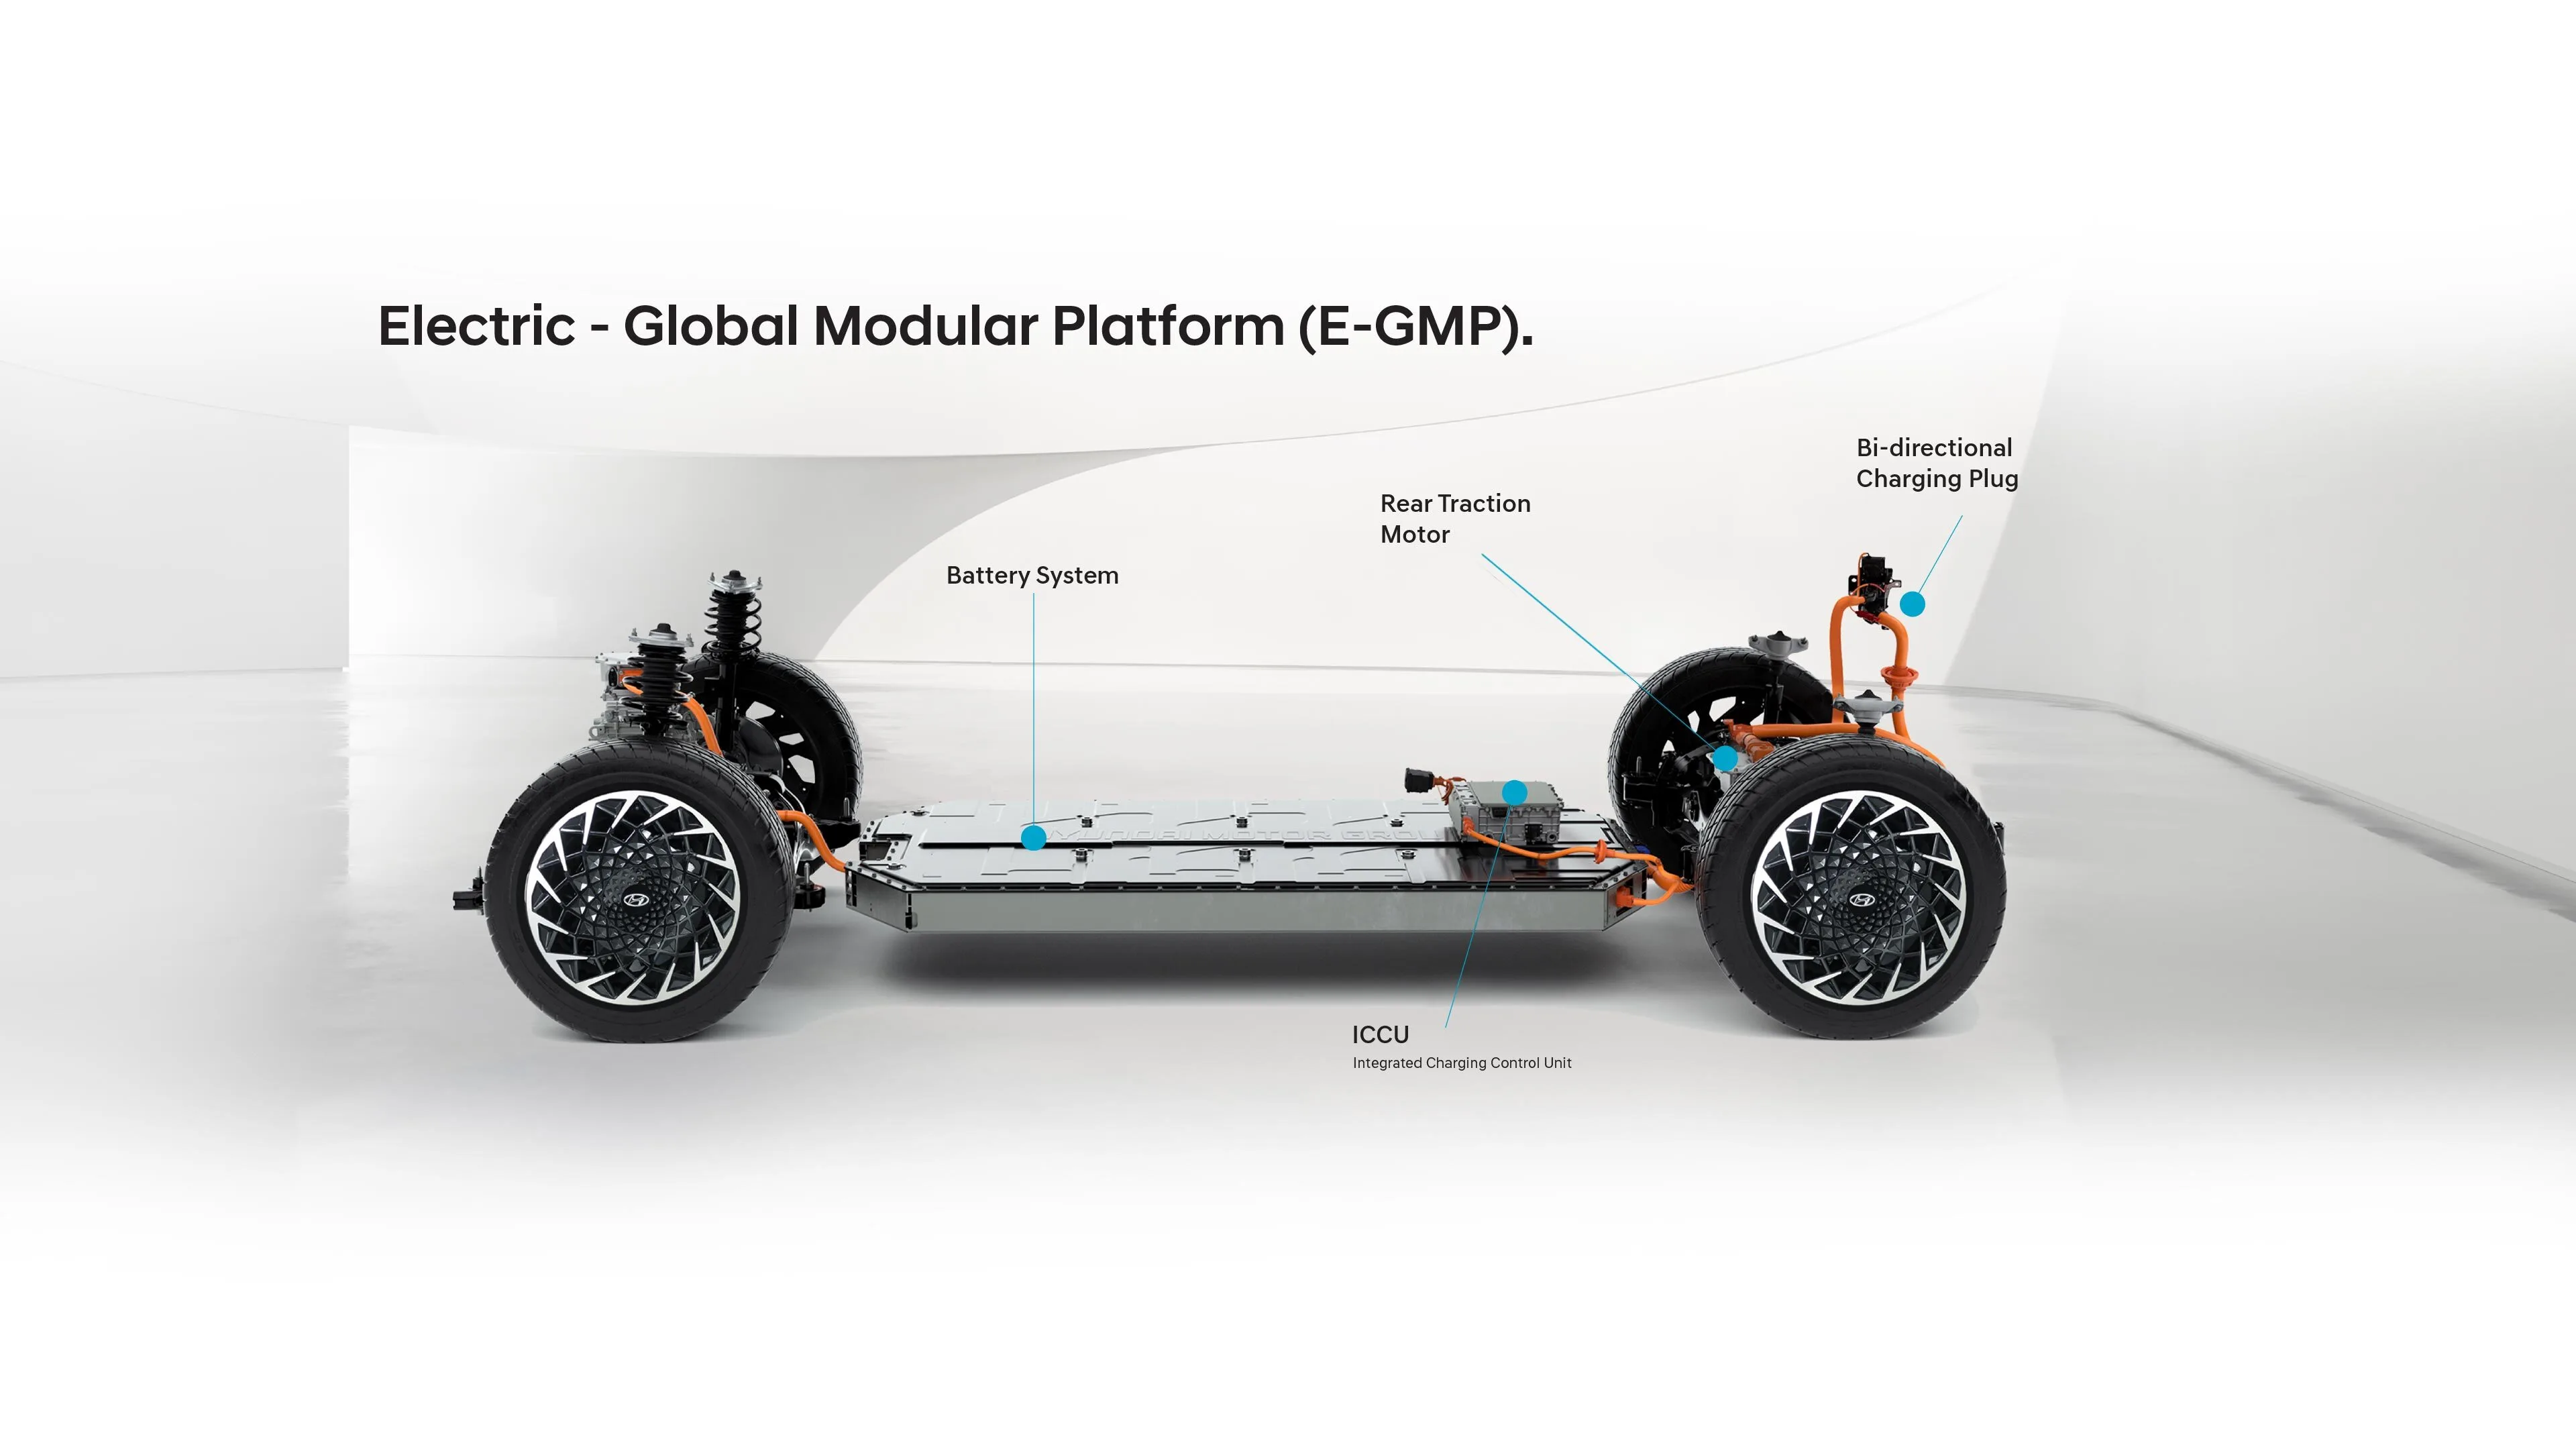 Dedicated battery electric vehicle platform